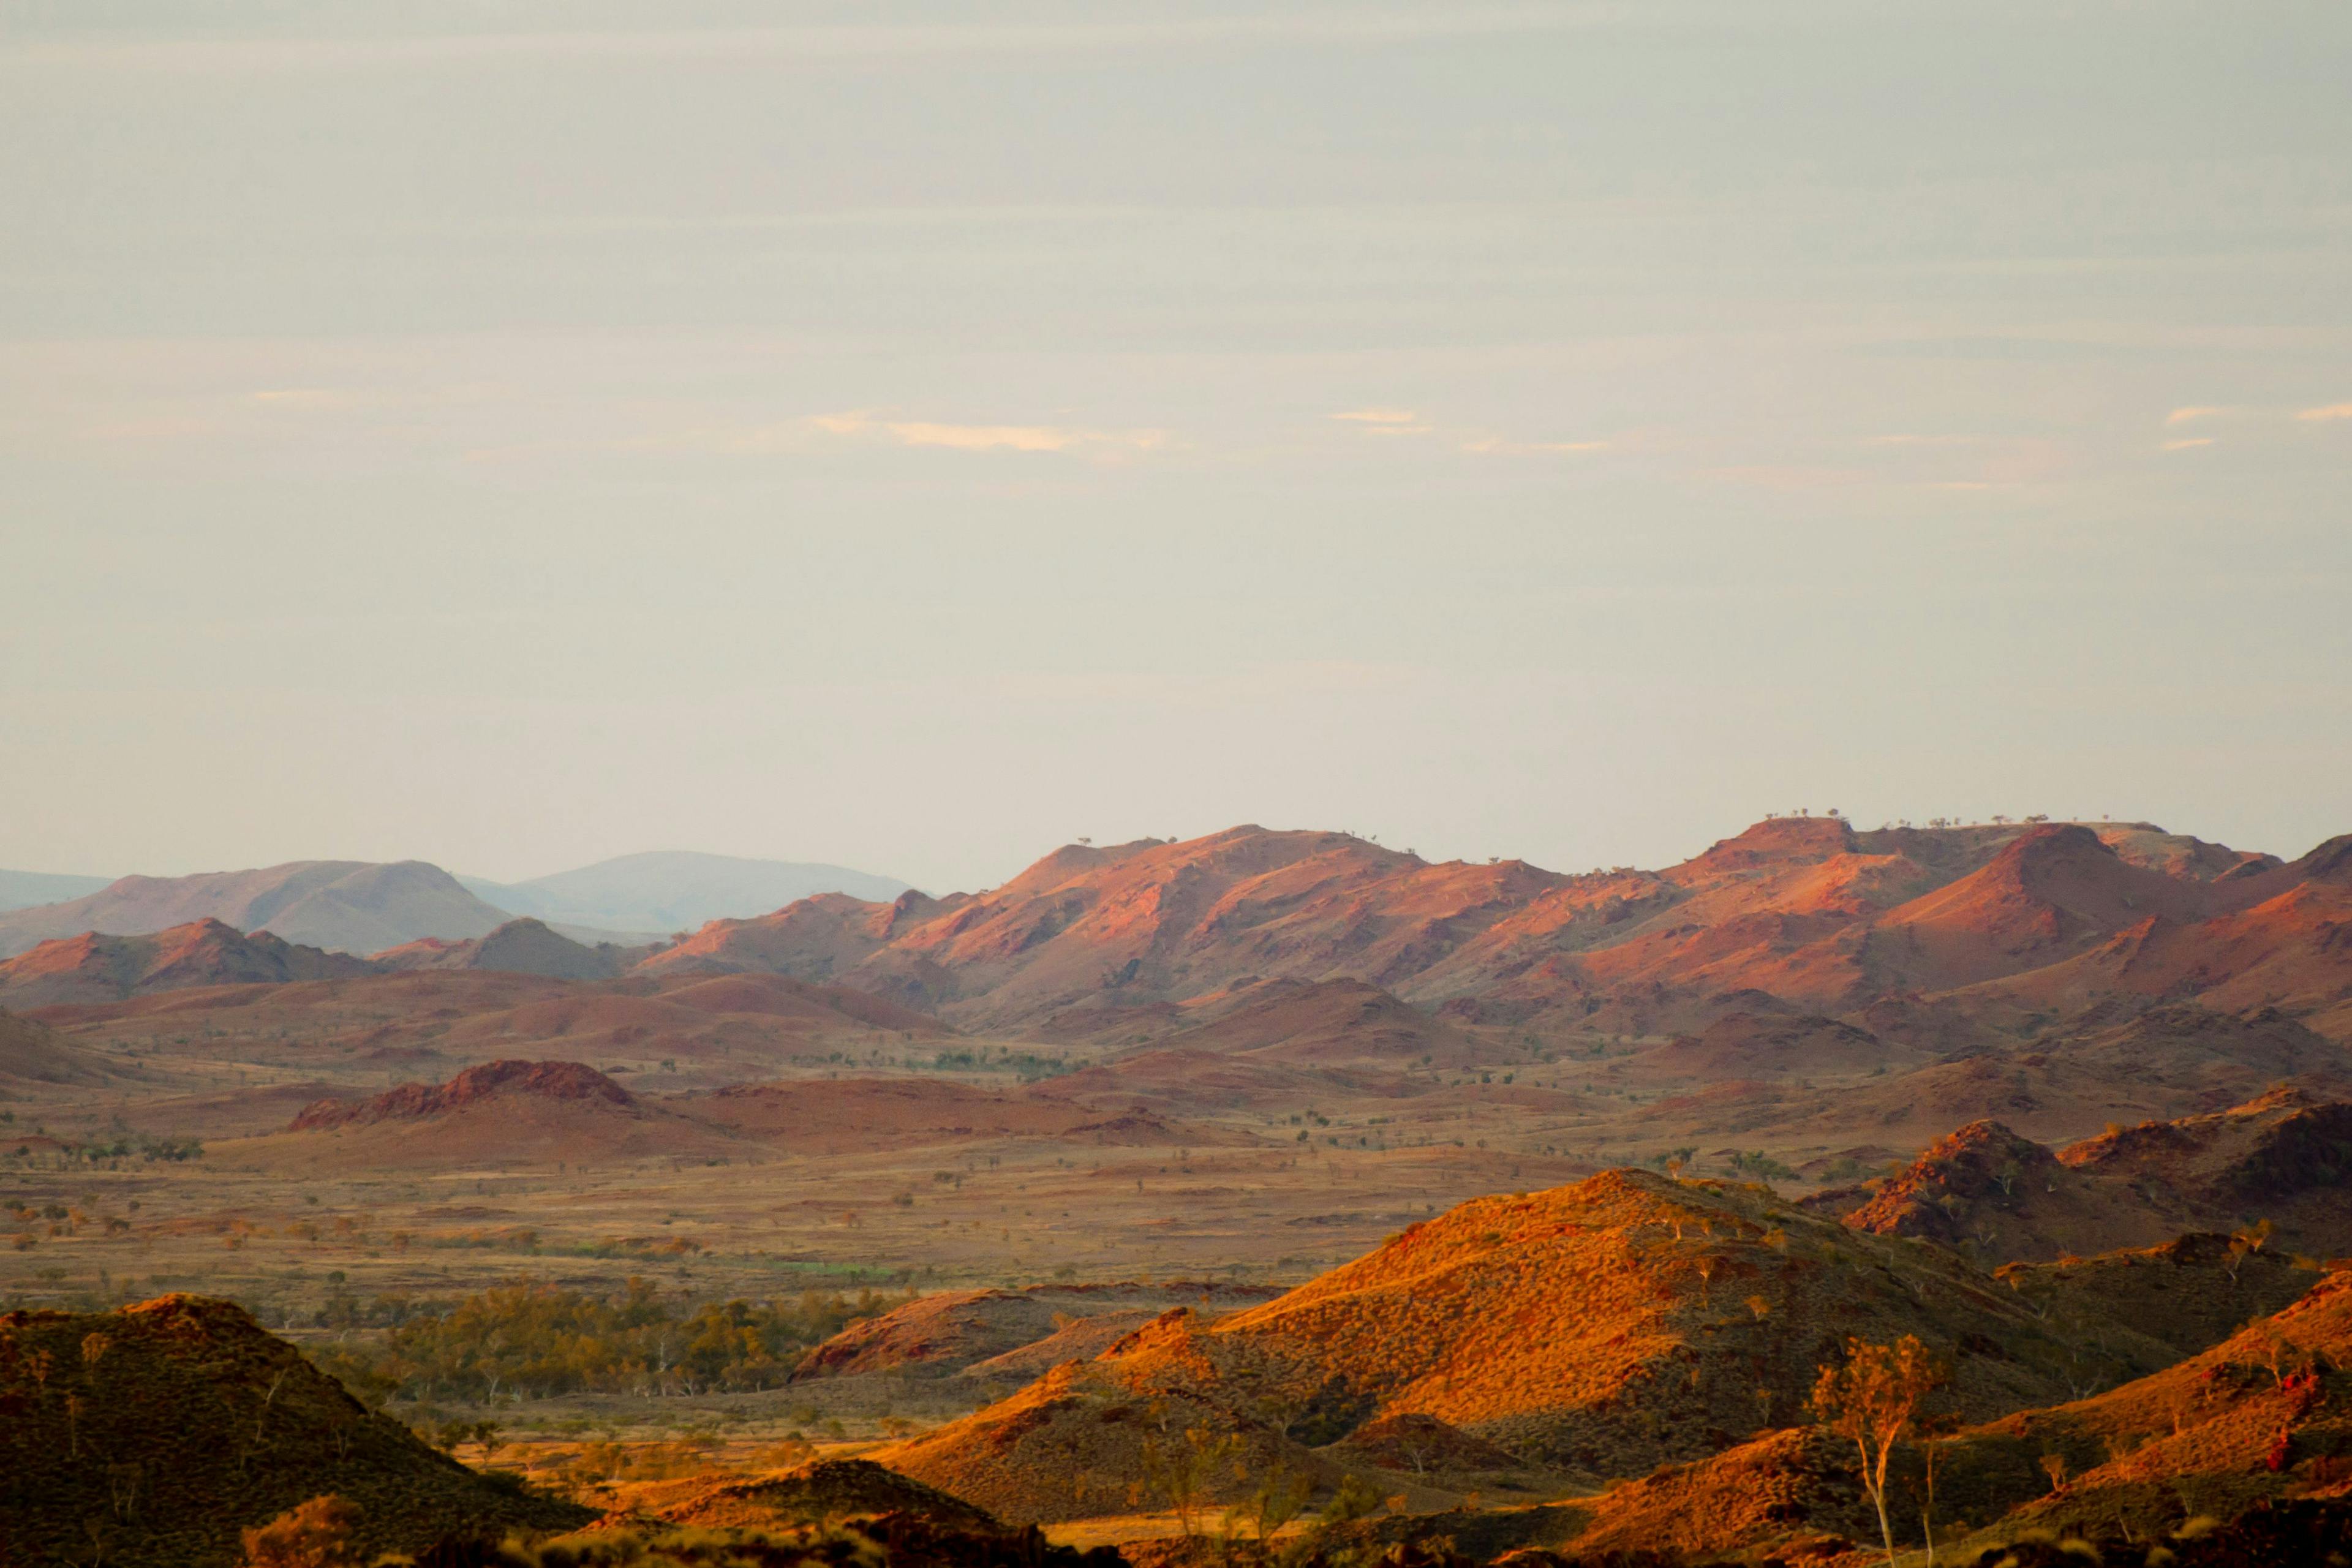 Hamersley Range - Pilbara - Australia | Image Credit: © Adwo - stock.adobe.com